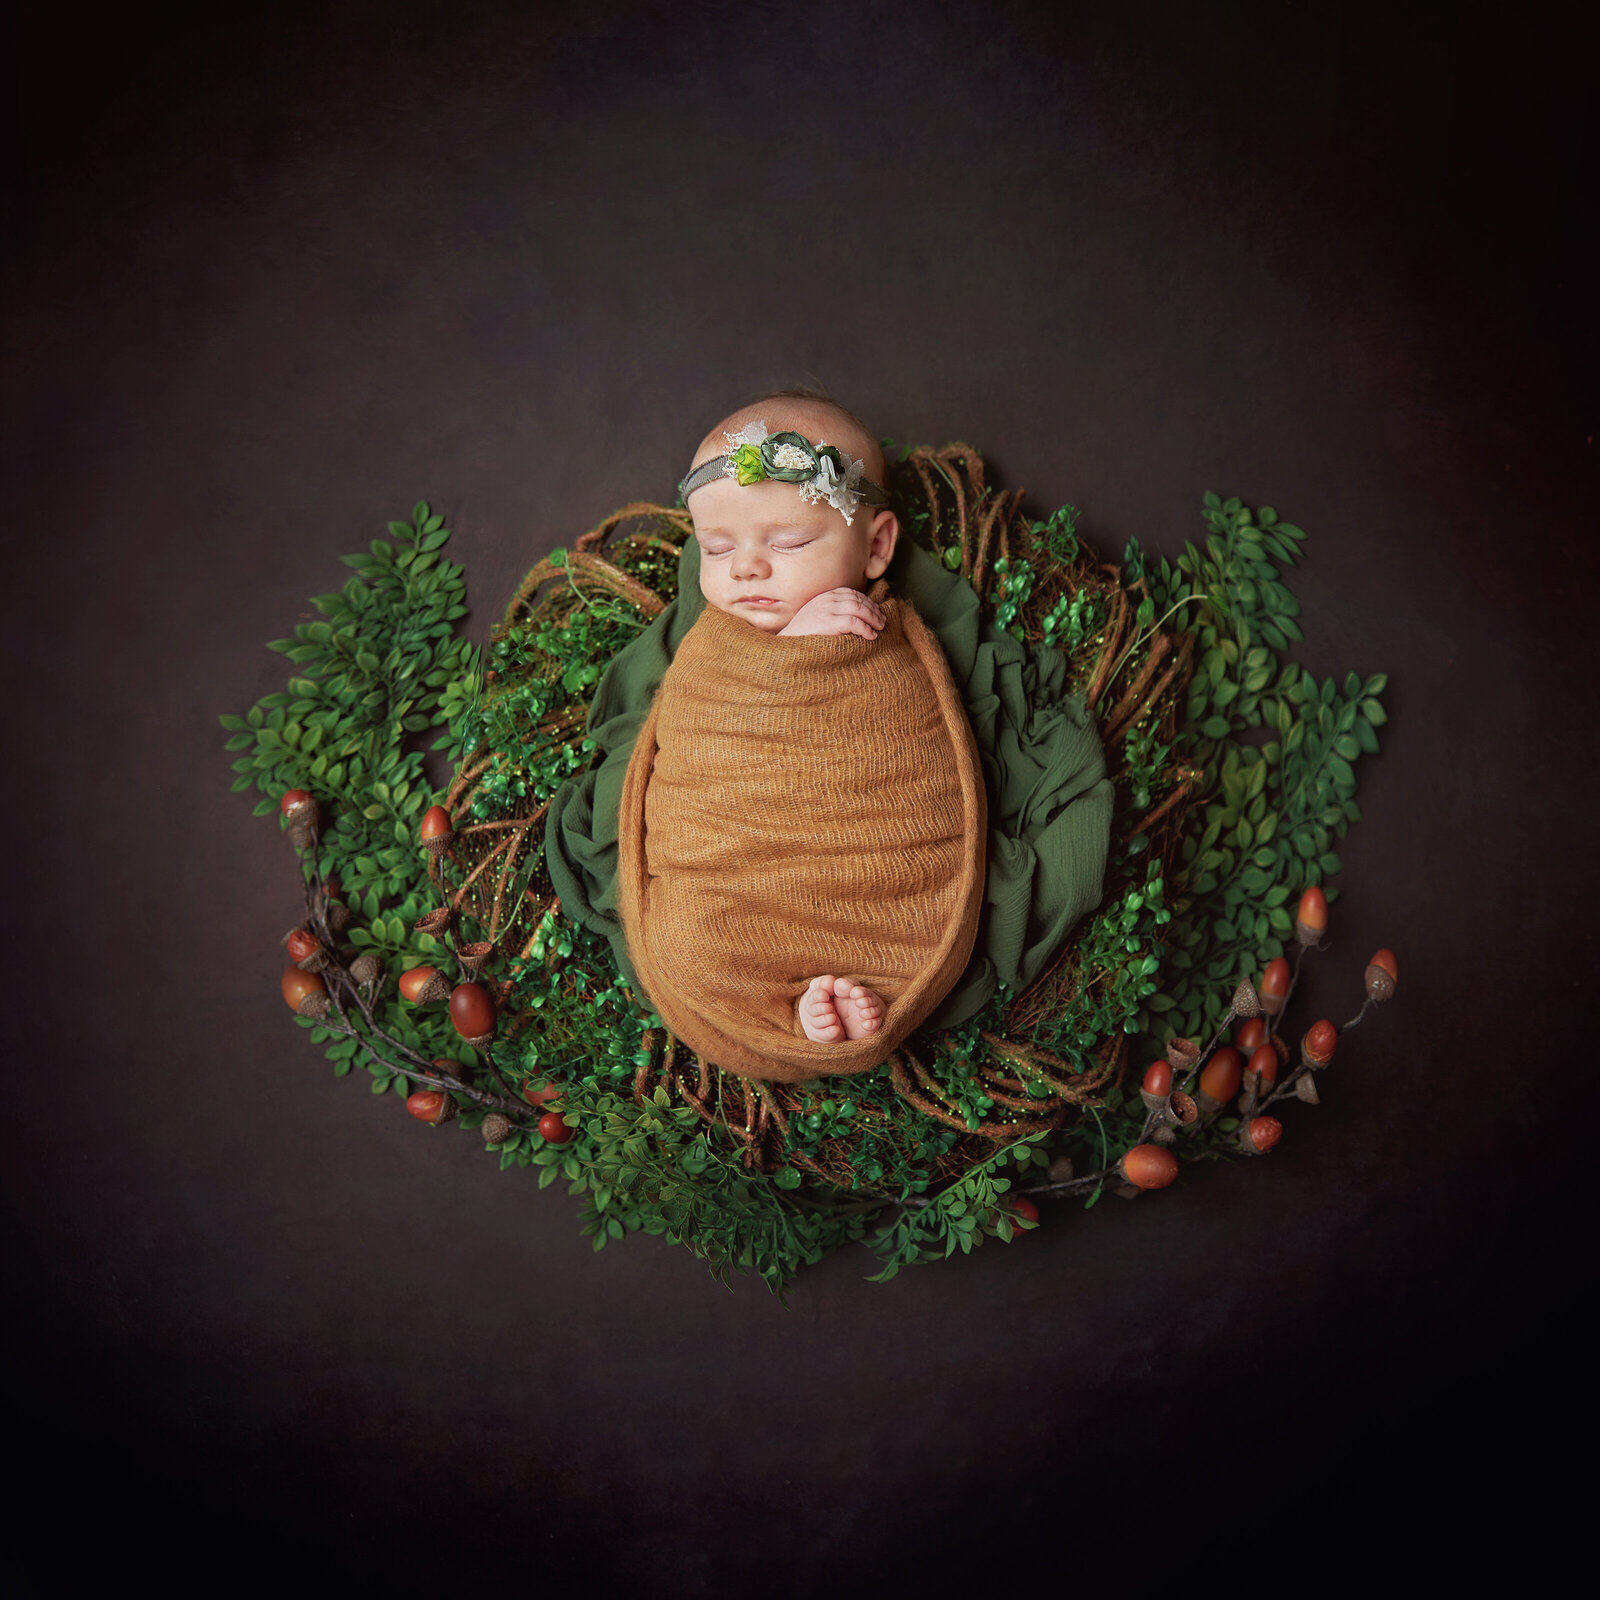 atlanta-best-award-winning-newborn-fine-art-dark-acorns-nature-nest-wreath-boy-girl-portrait-studio-photography-photographer-twin-rivers-01